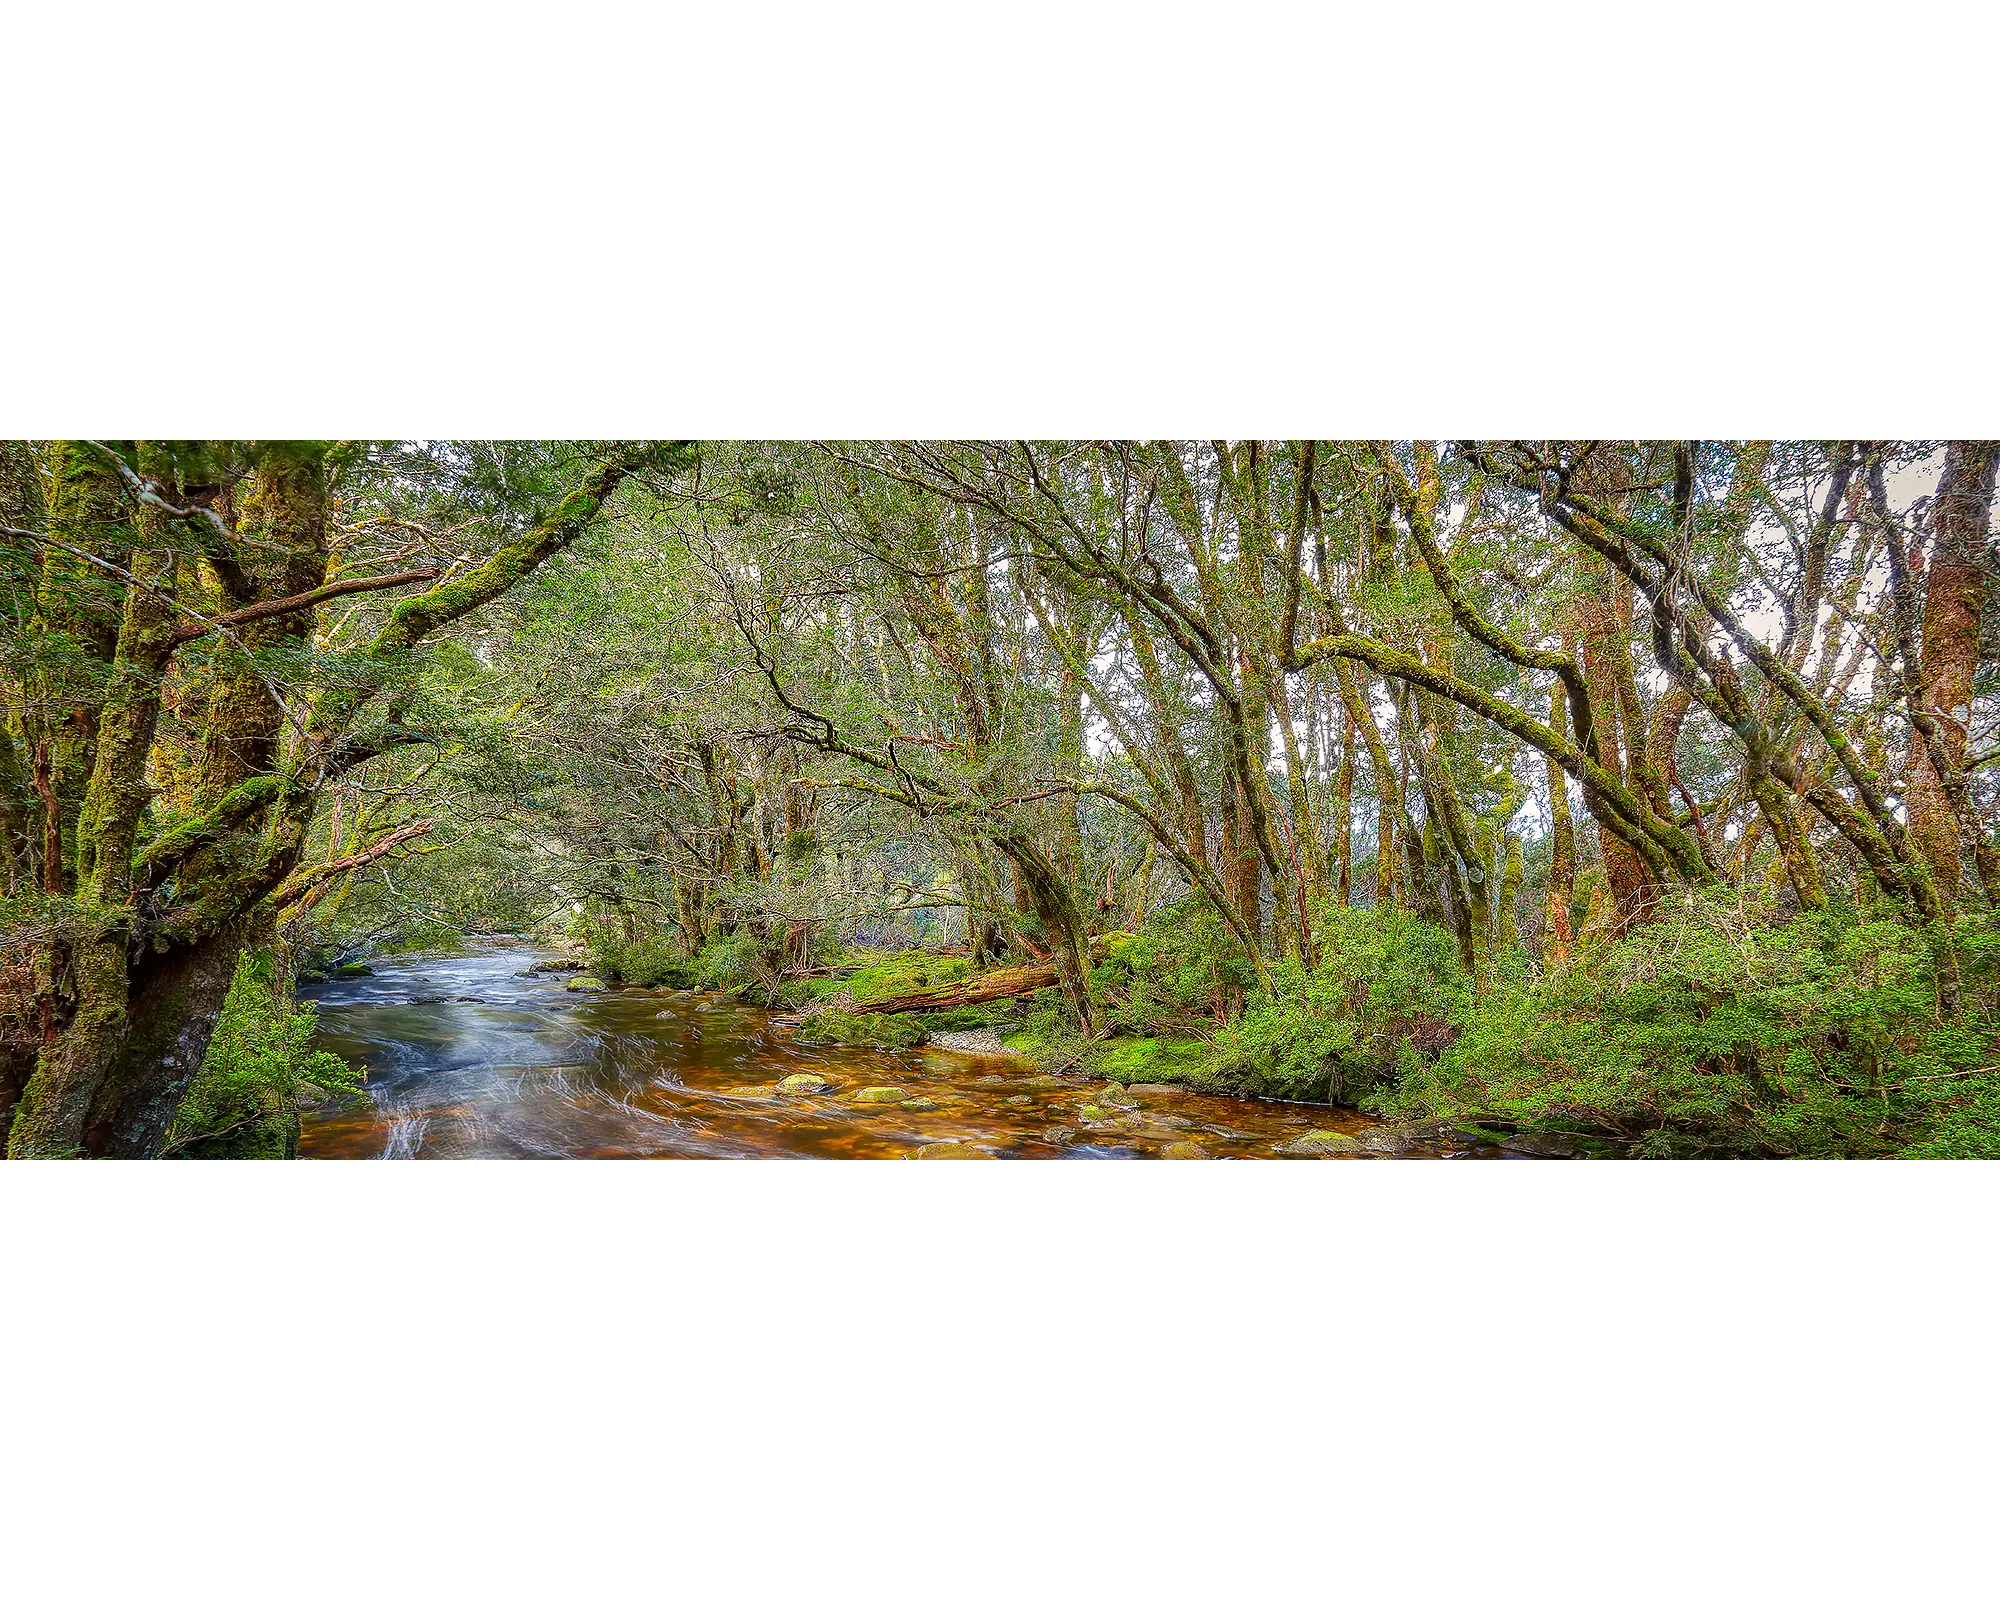 Pencil Pine Creek flowing through lush green forest, Lake St Clair National Park, Tasmania.